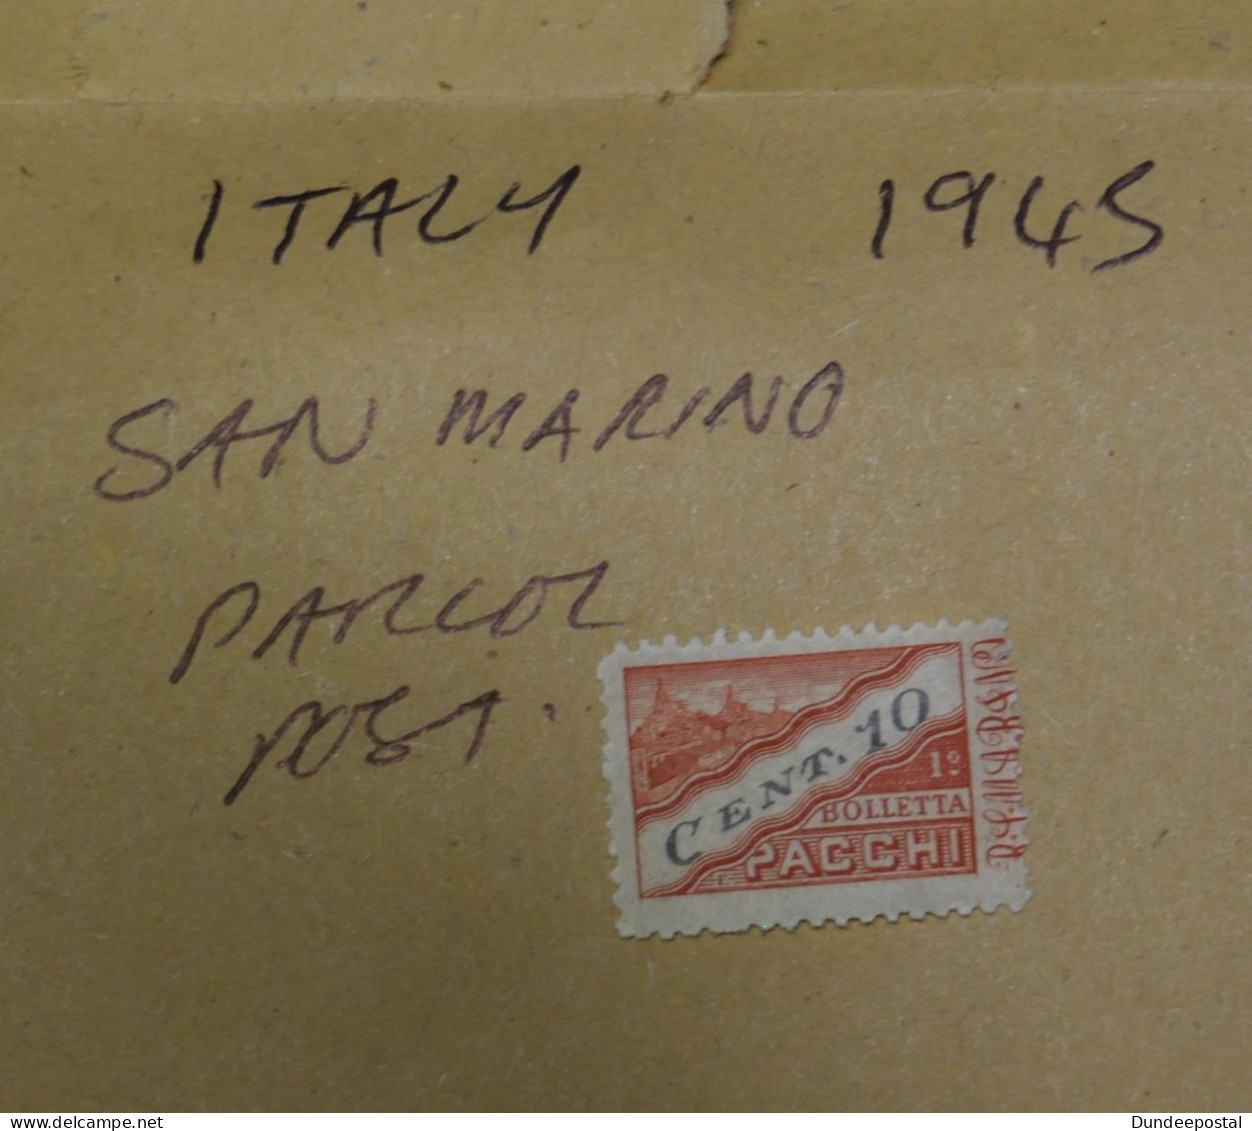 ITALY  STAMPS  San Marino Parcel Post 1945 ~~L@@K~~ - Paketmarken